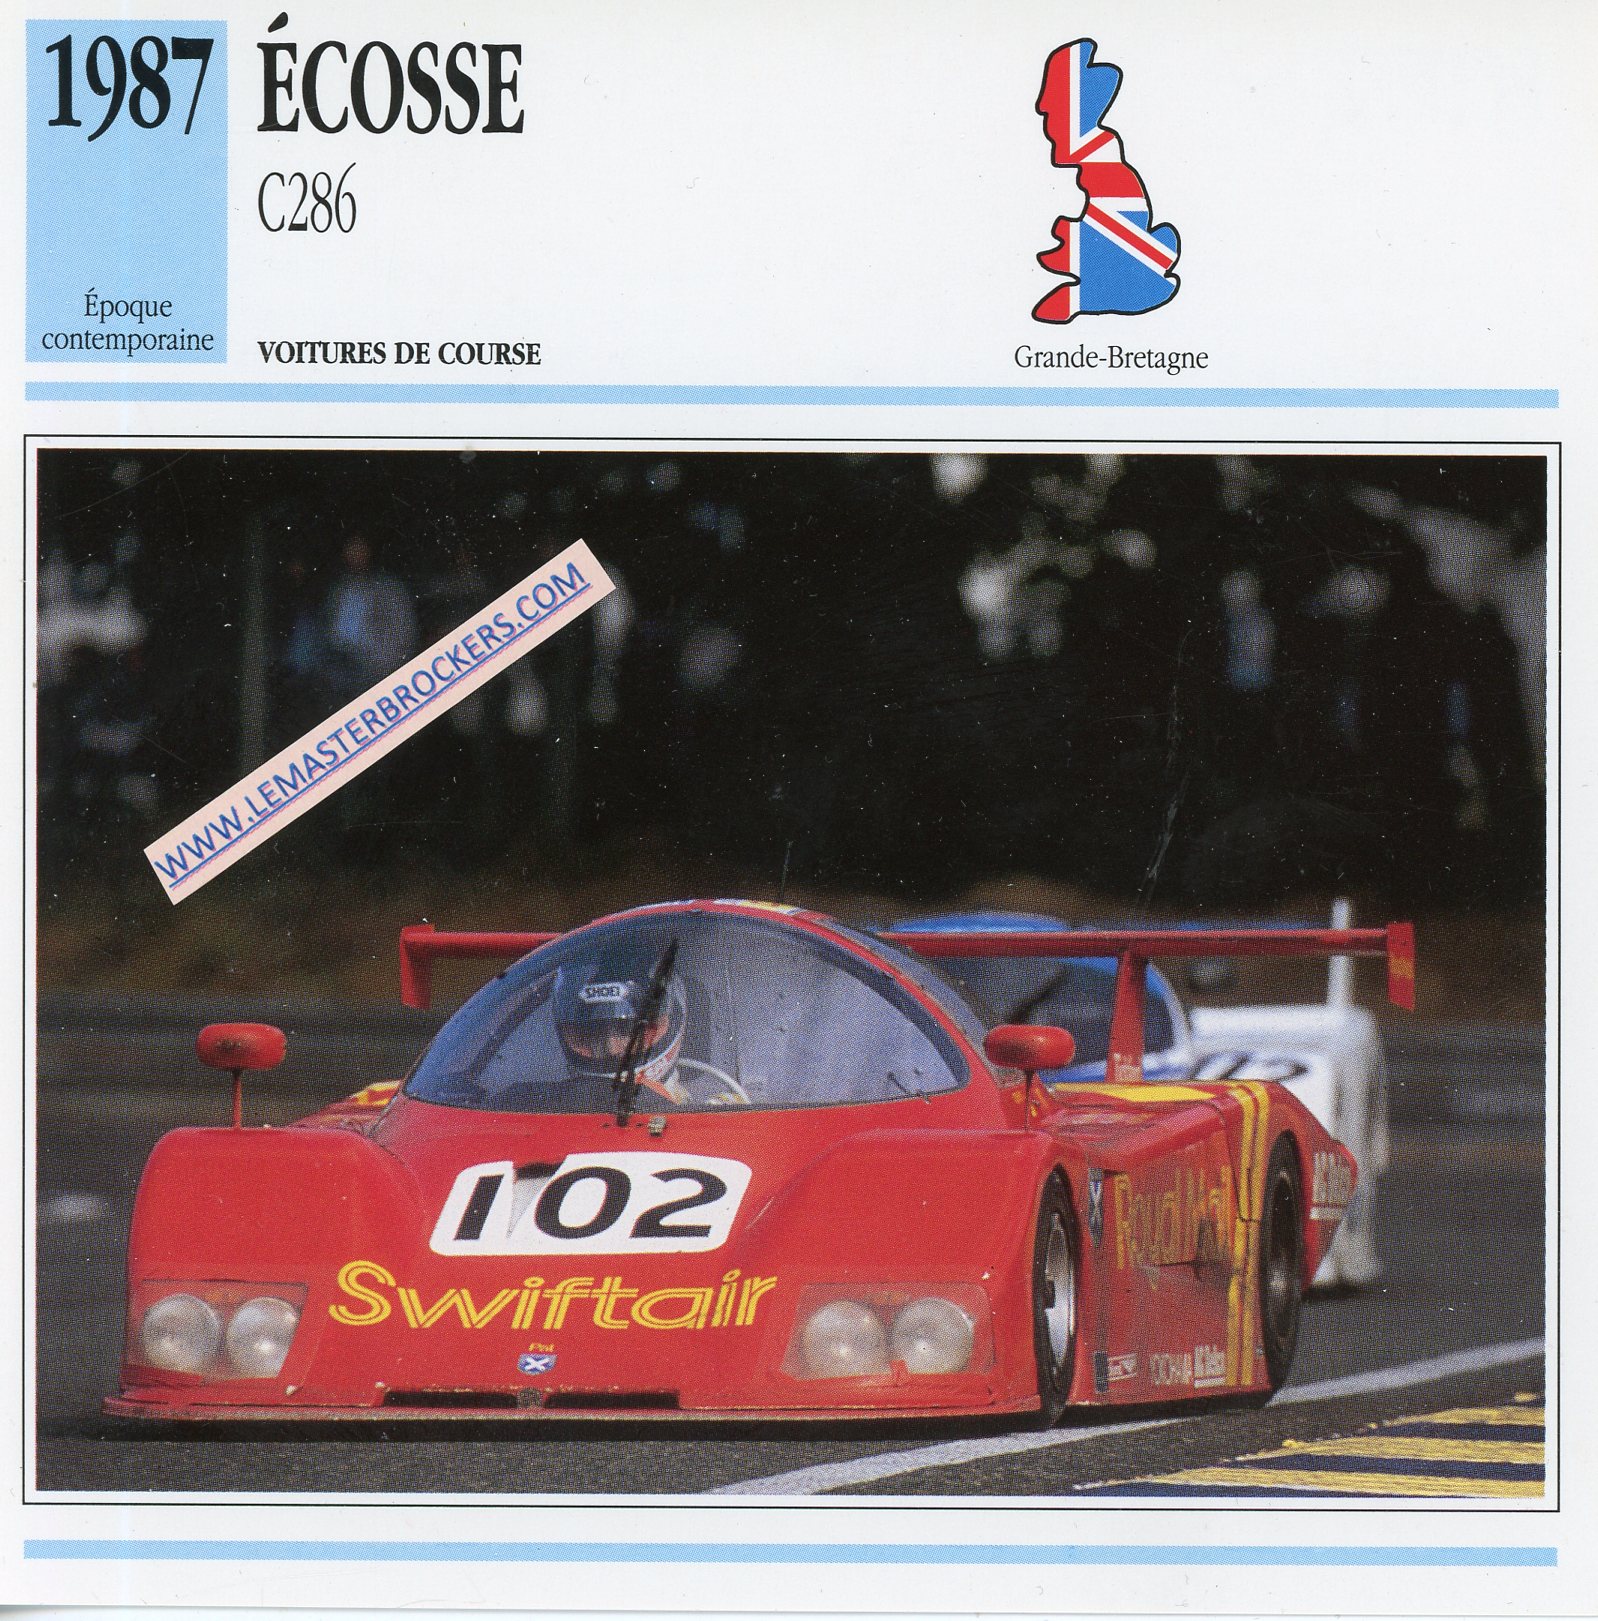 FICHE-AUTO-ECOSSE-C286-1987-LEMASTERBROCKERS-ATLAS